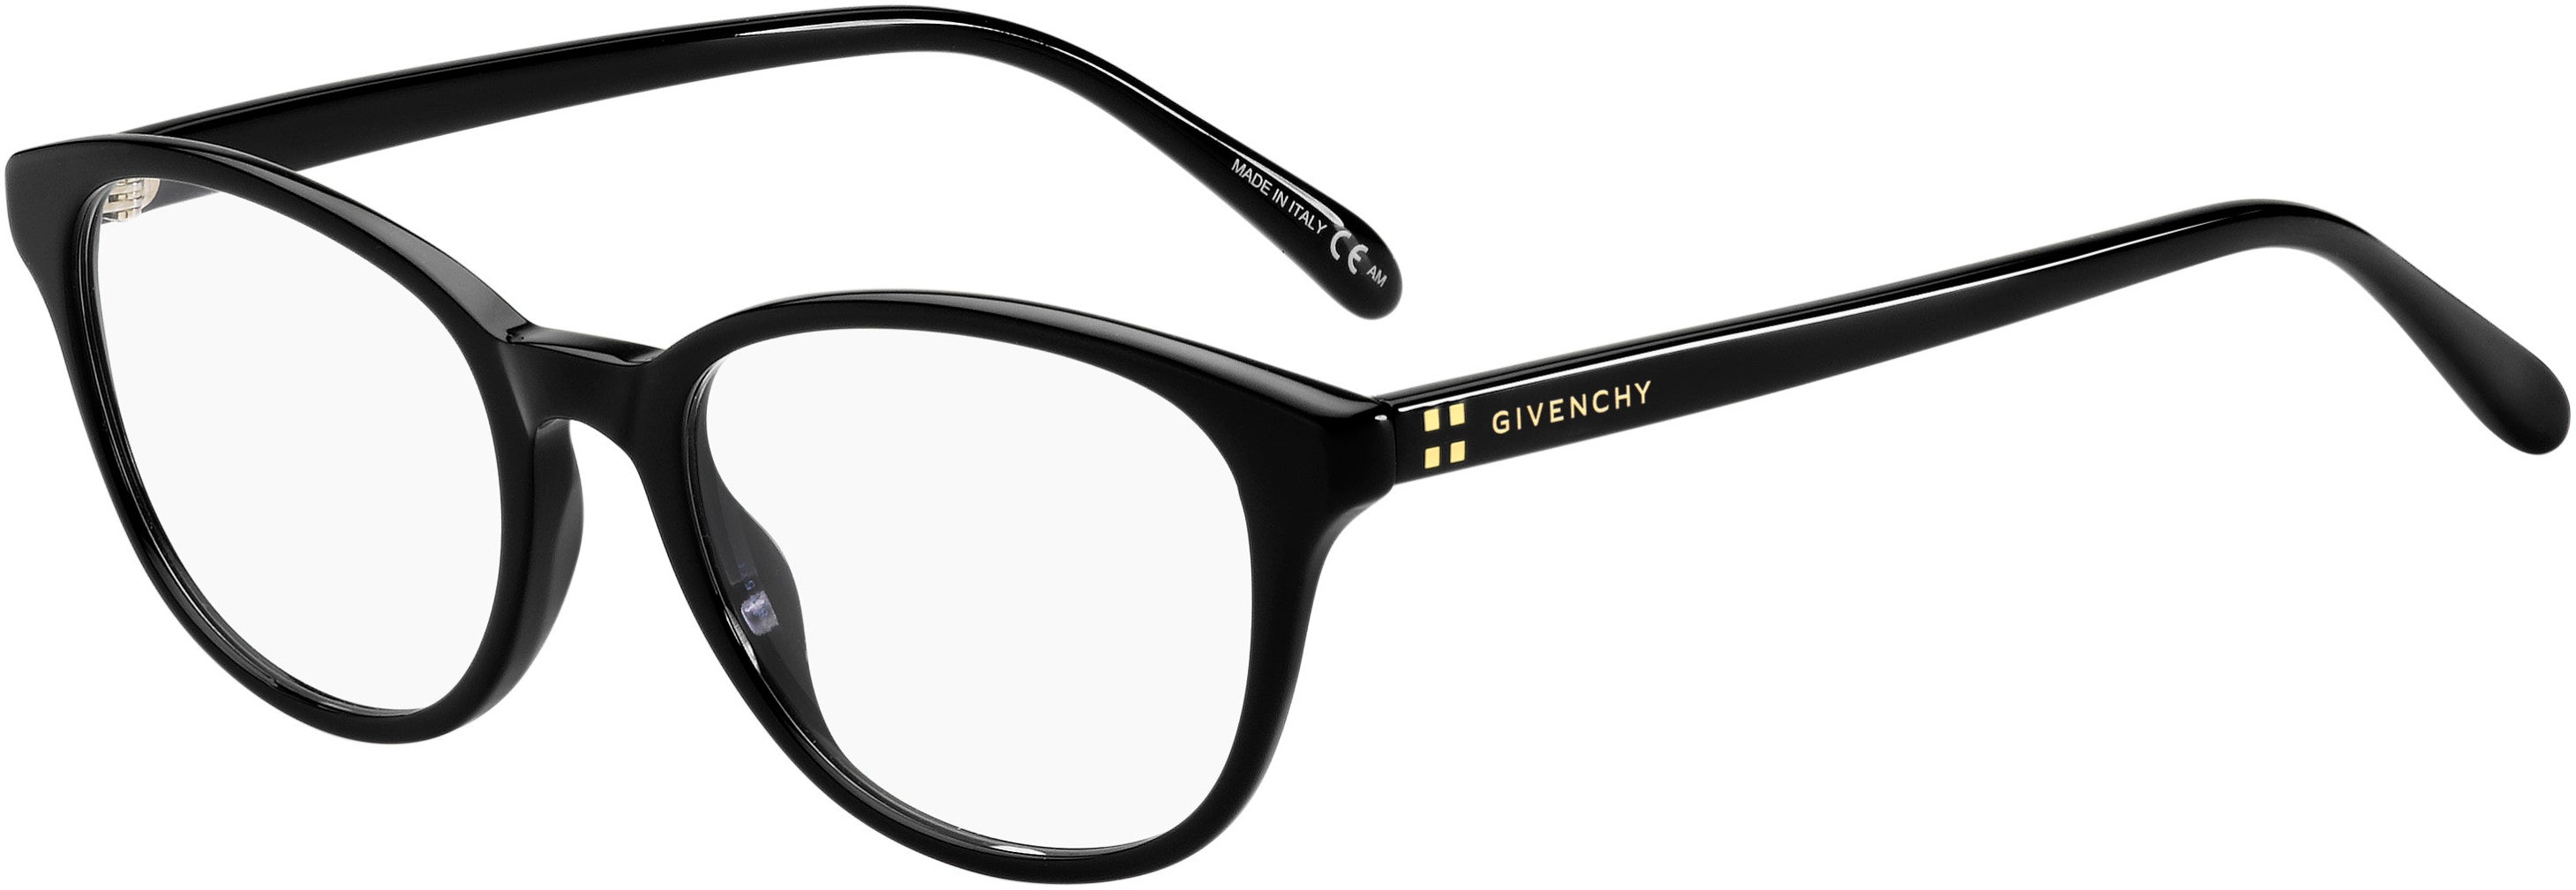  Givenchy 0106 Rectangular Eyeglasses 0807-0807  Black (00 Demo Lens)